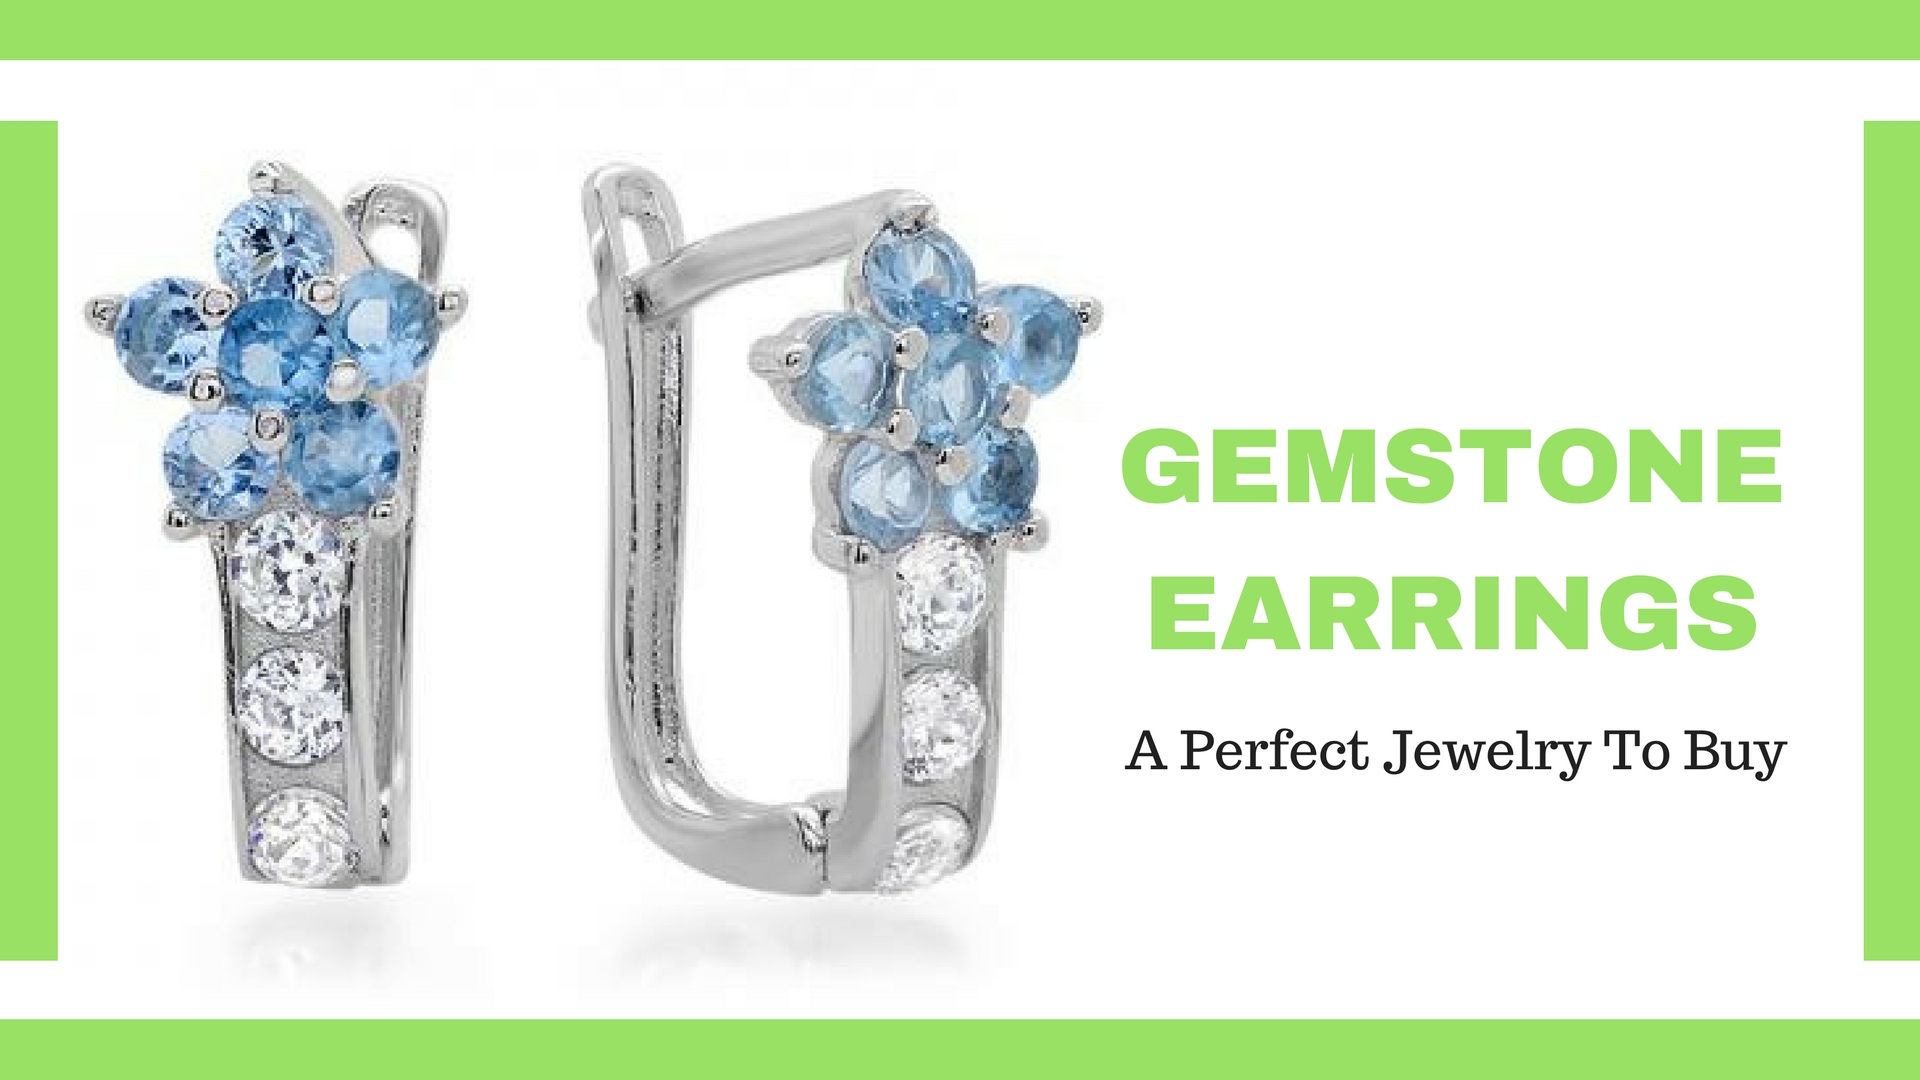 4 Reasons Why You Should Buy Gemstone Earrings - Dazzling Rock